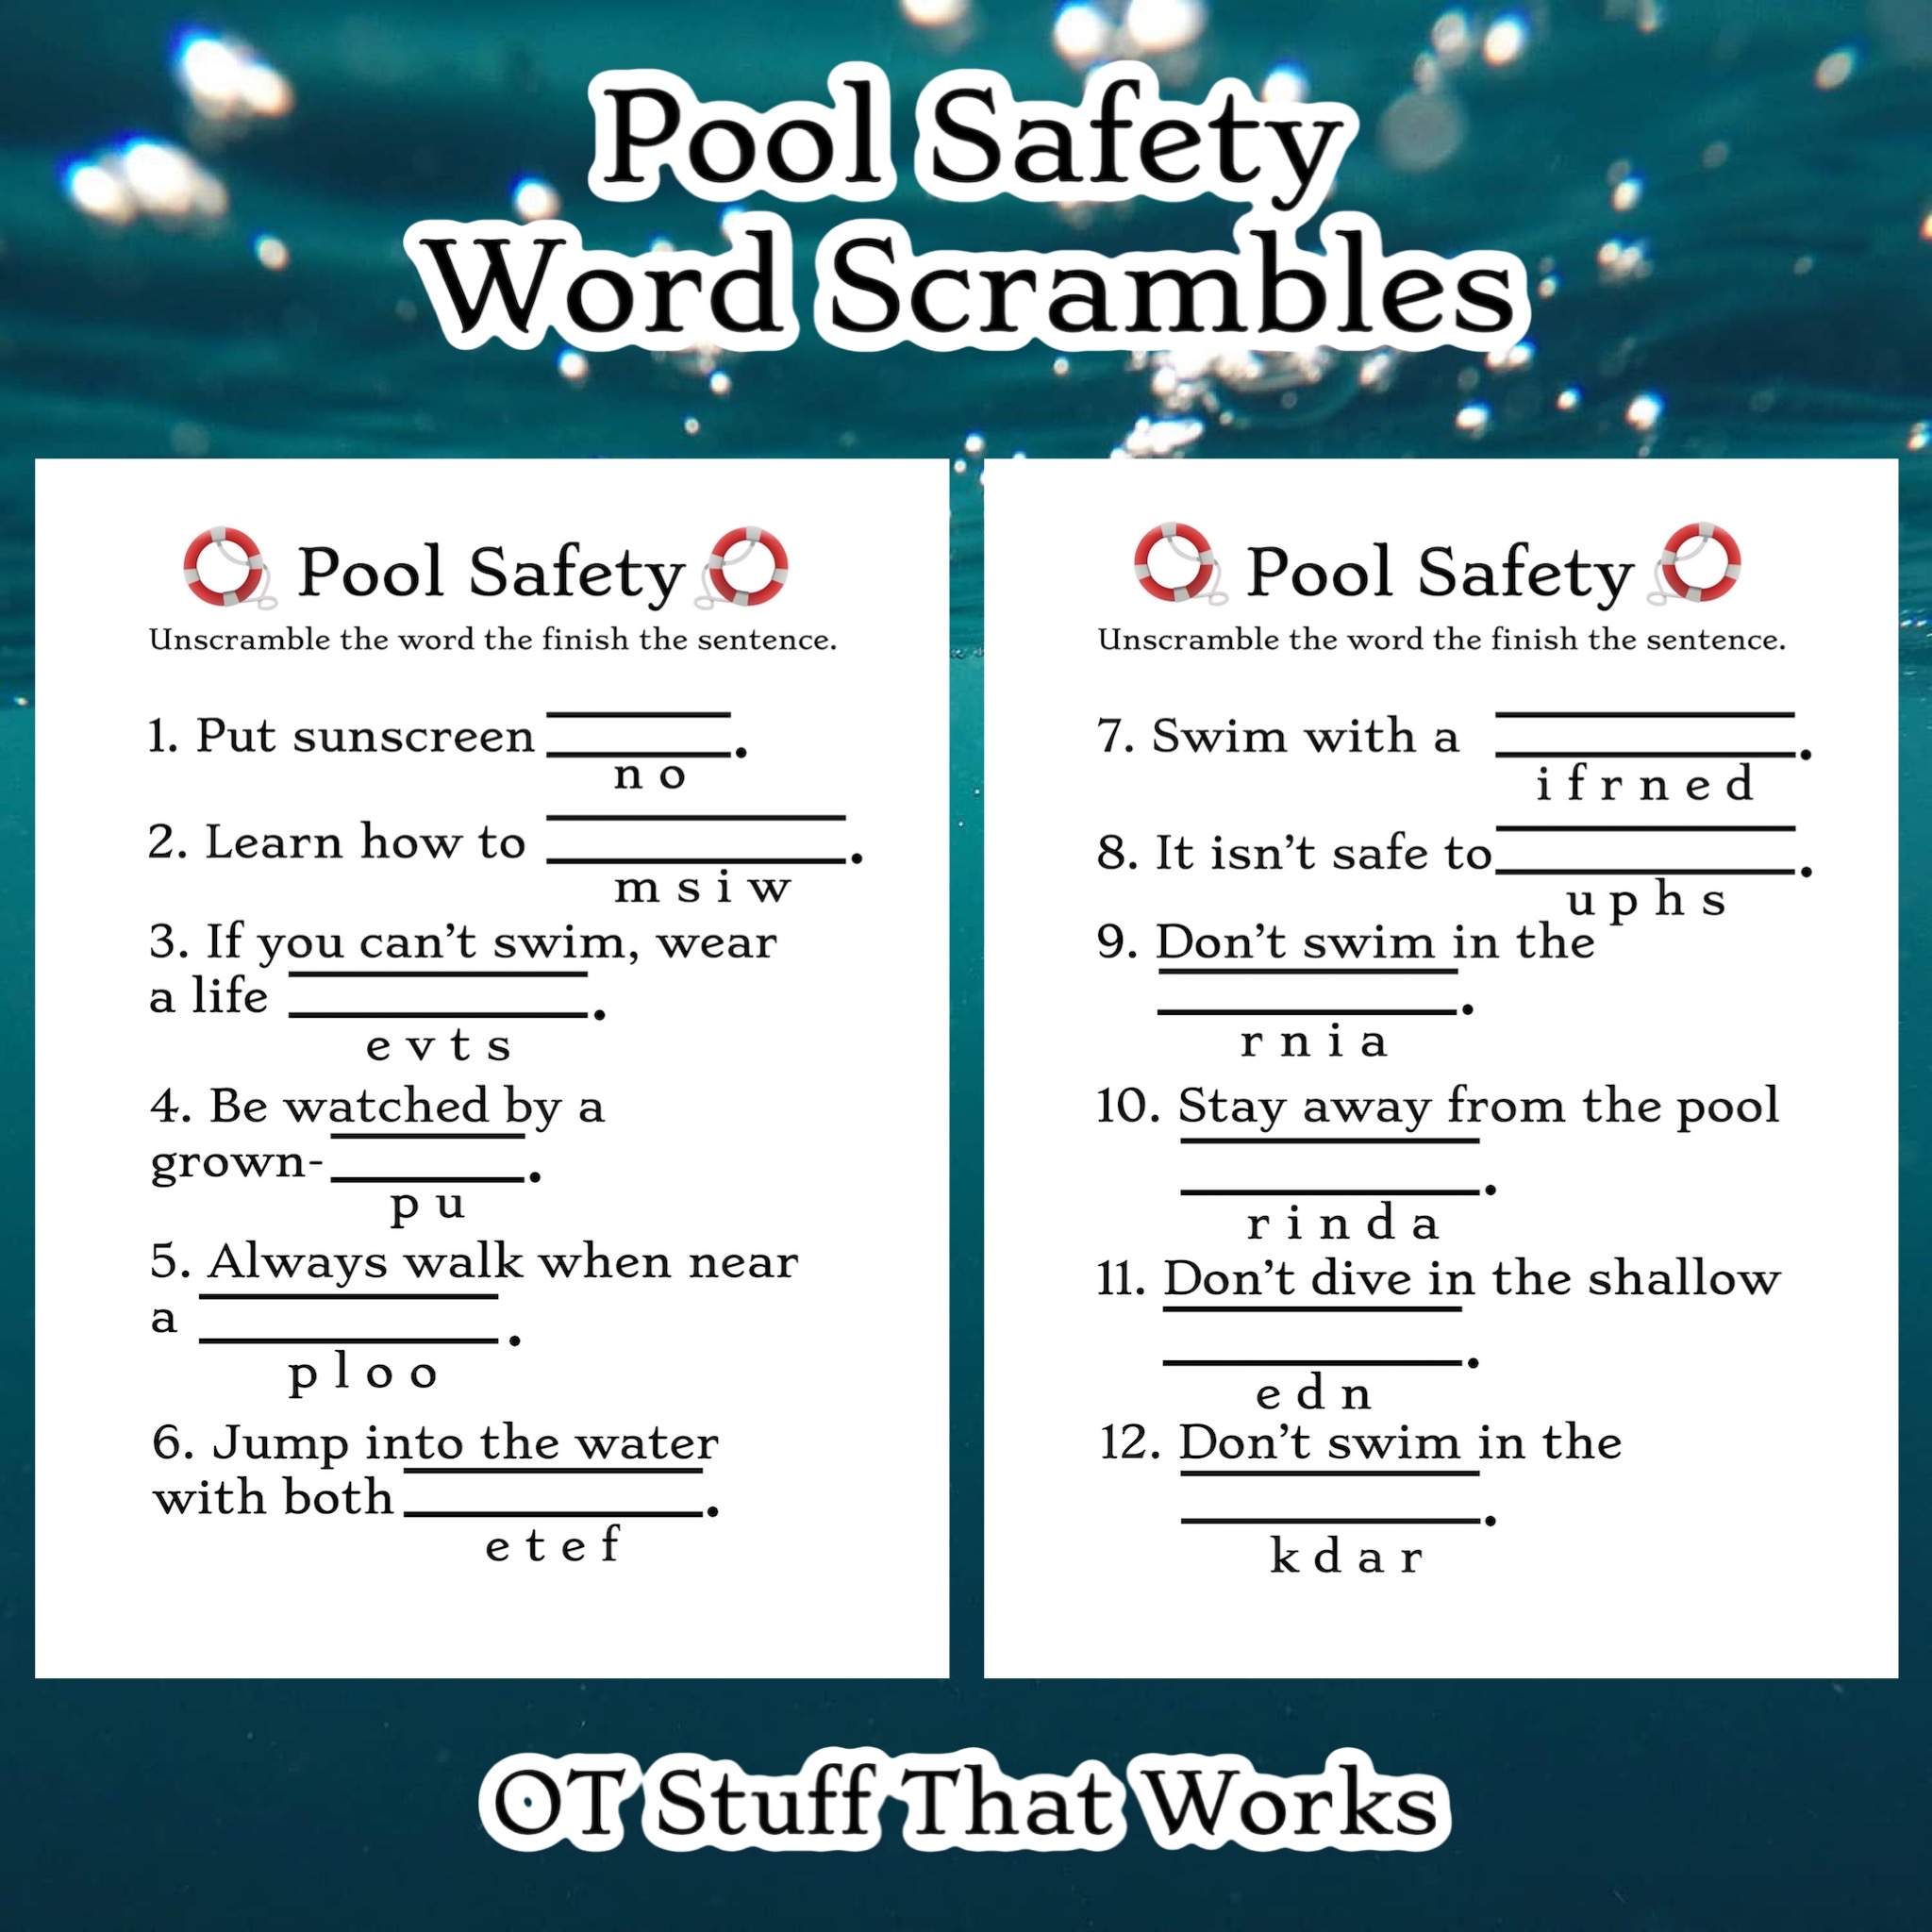 Pool Safety Word Scrambles